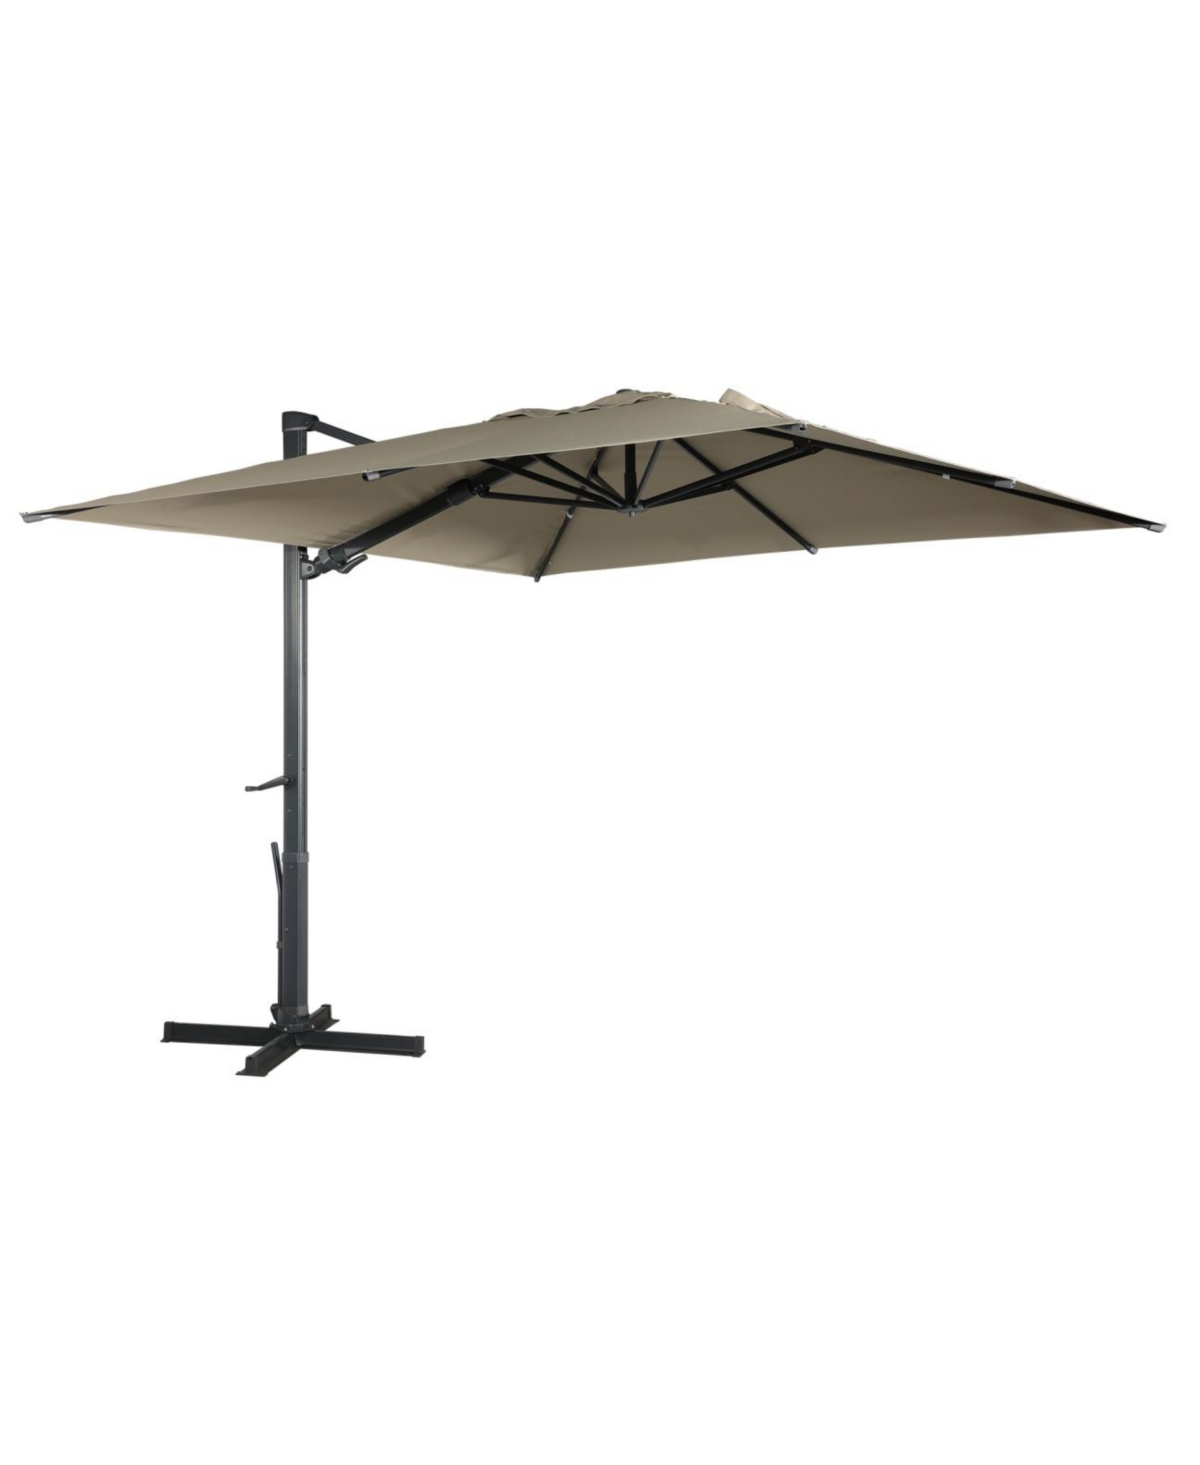 10ft Square Cantilever Patio Umbrella for Outdoor Shade - Gray